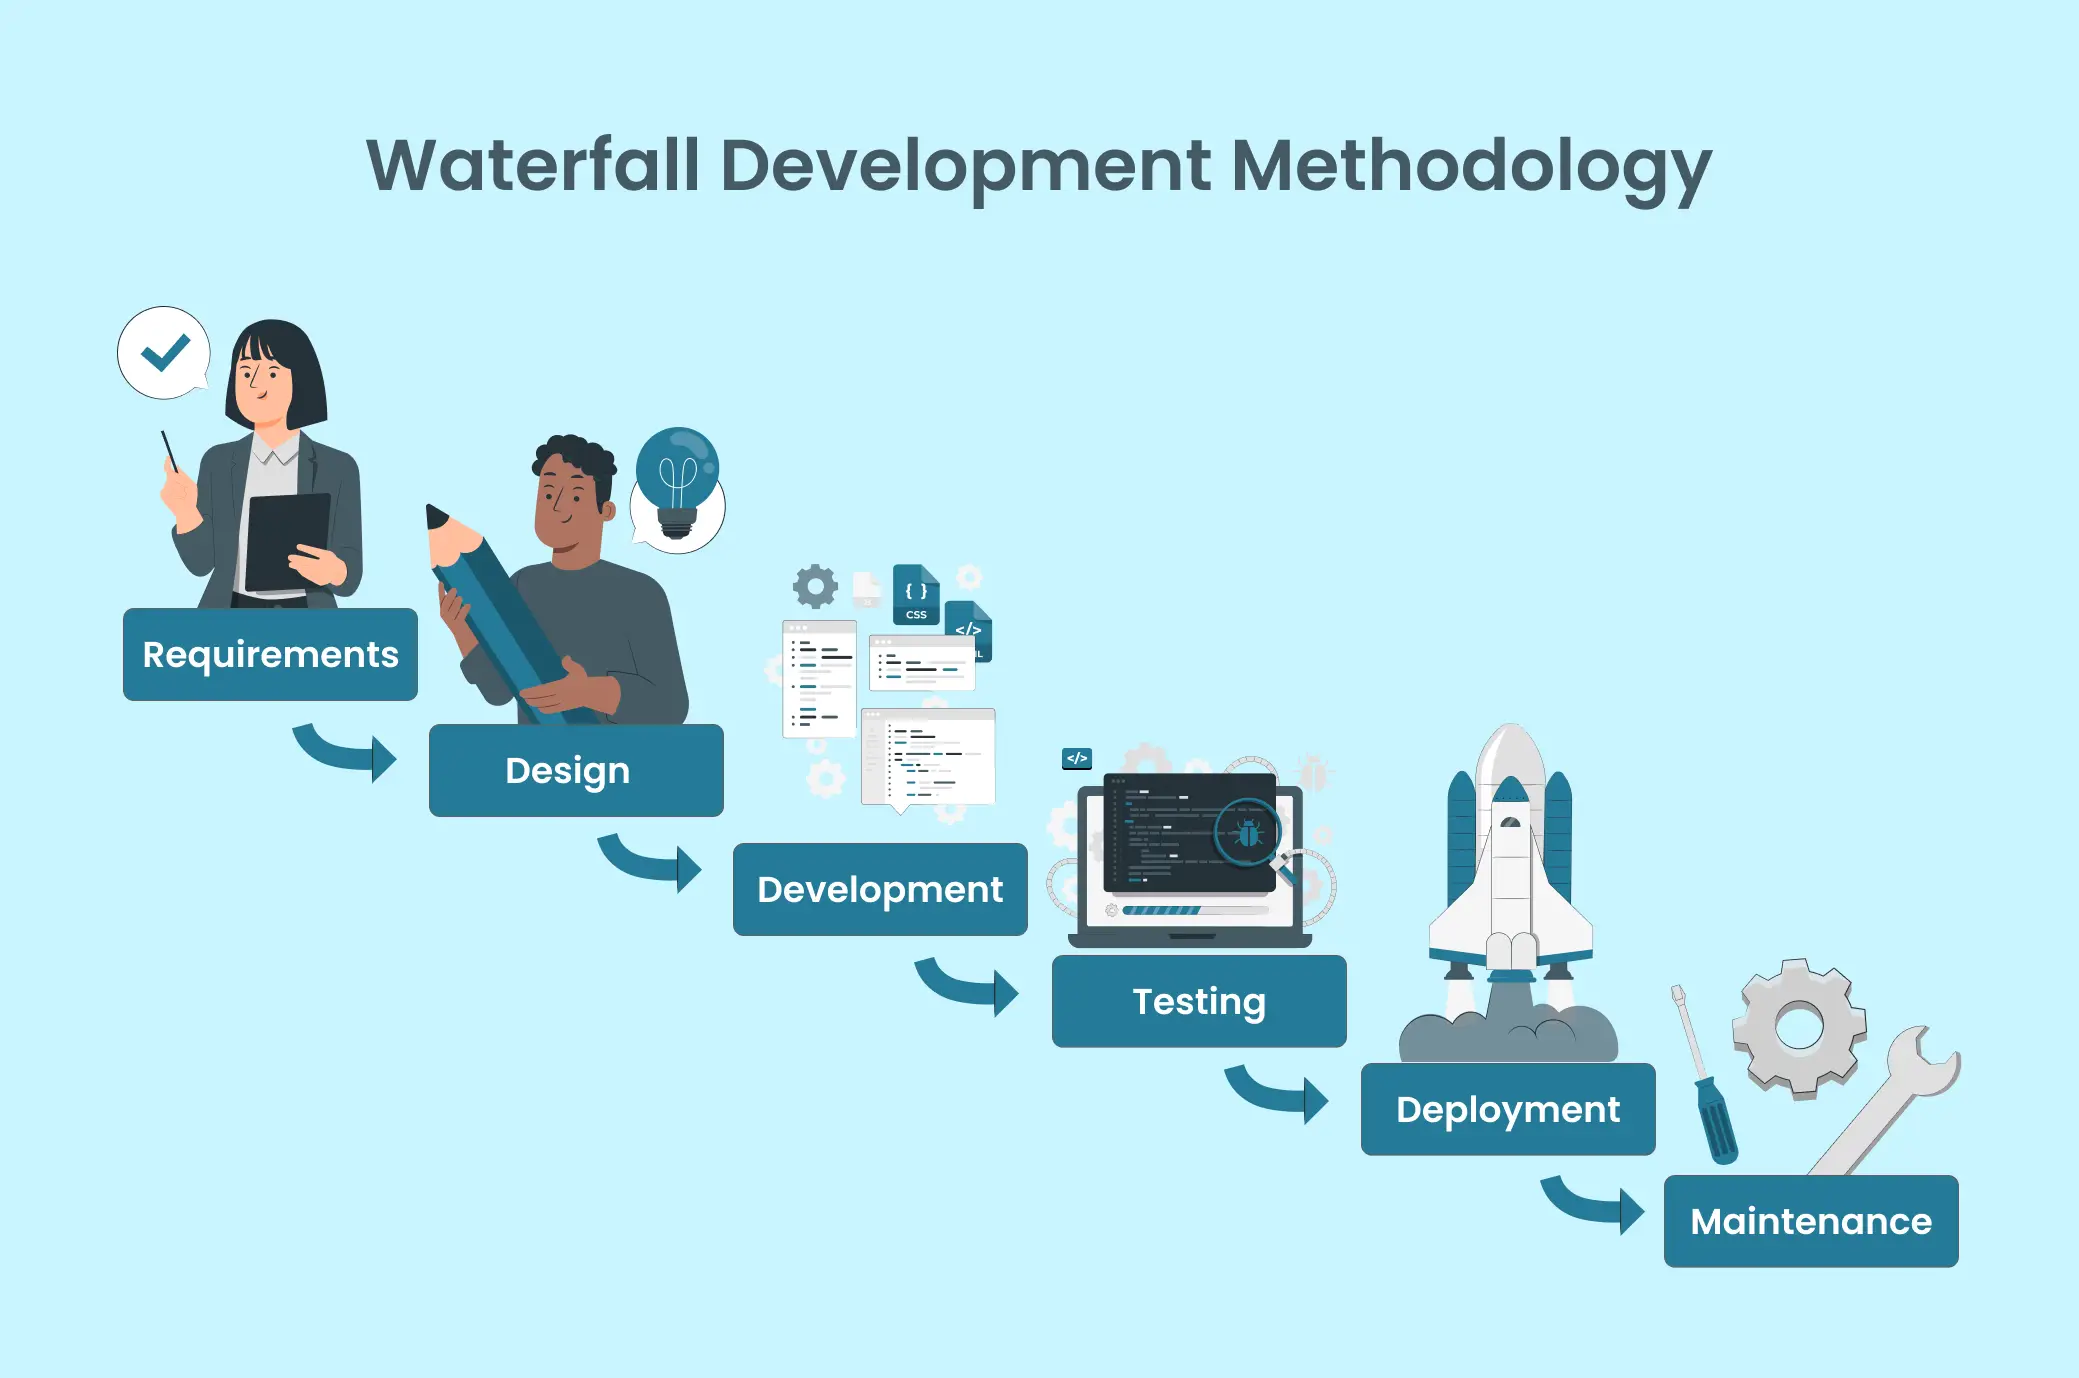 A Visual representation of Waterfall Development Methodology.